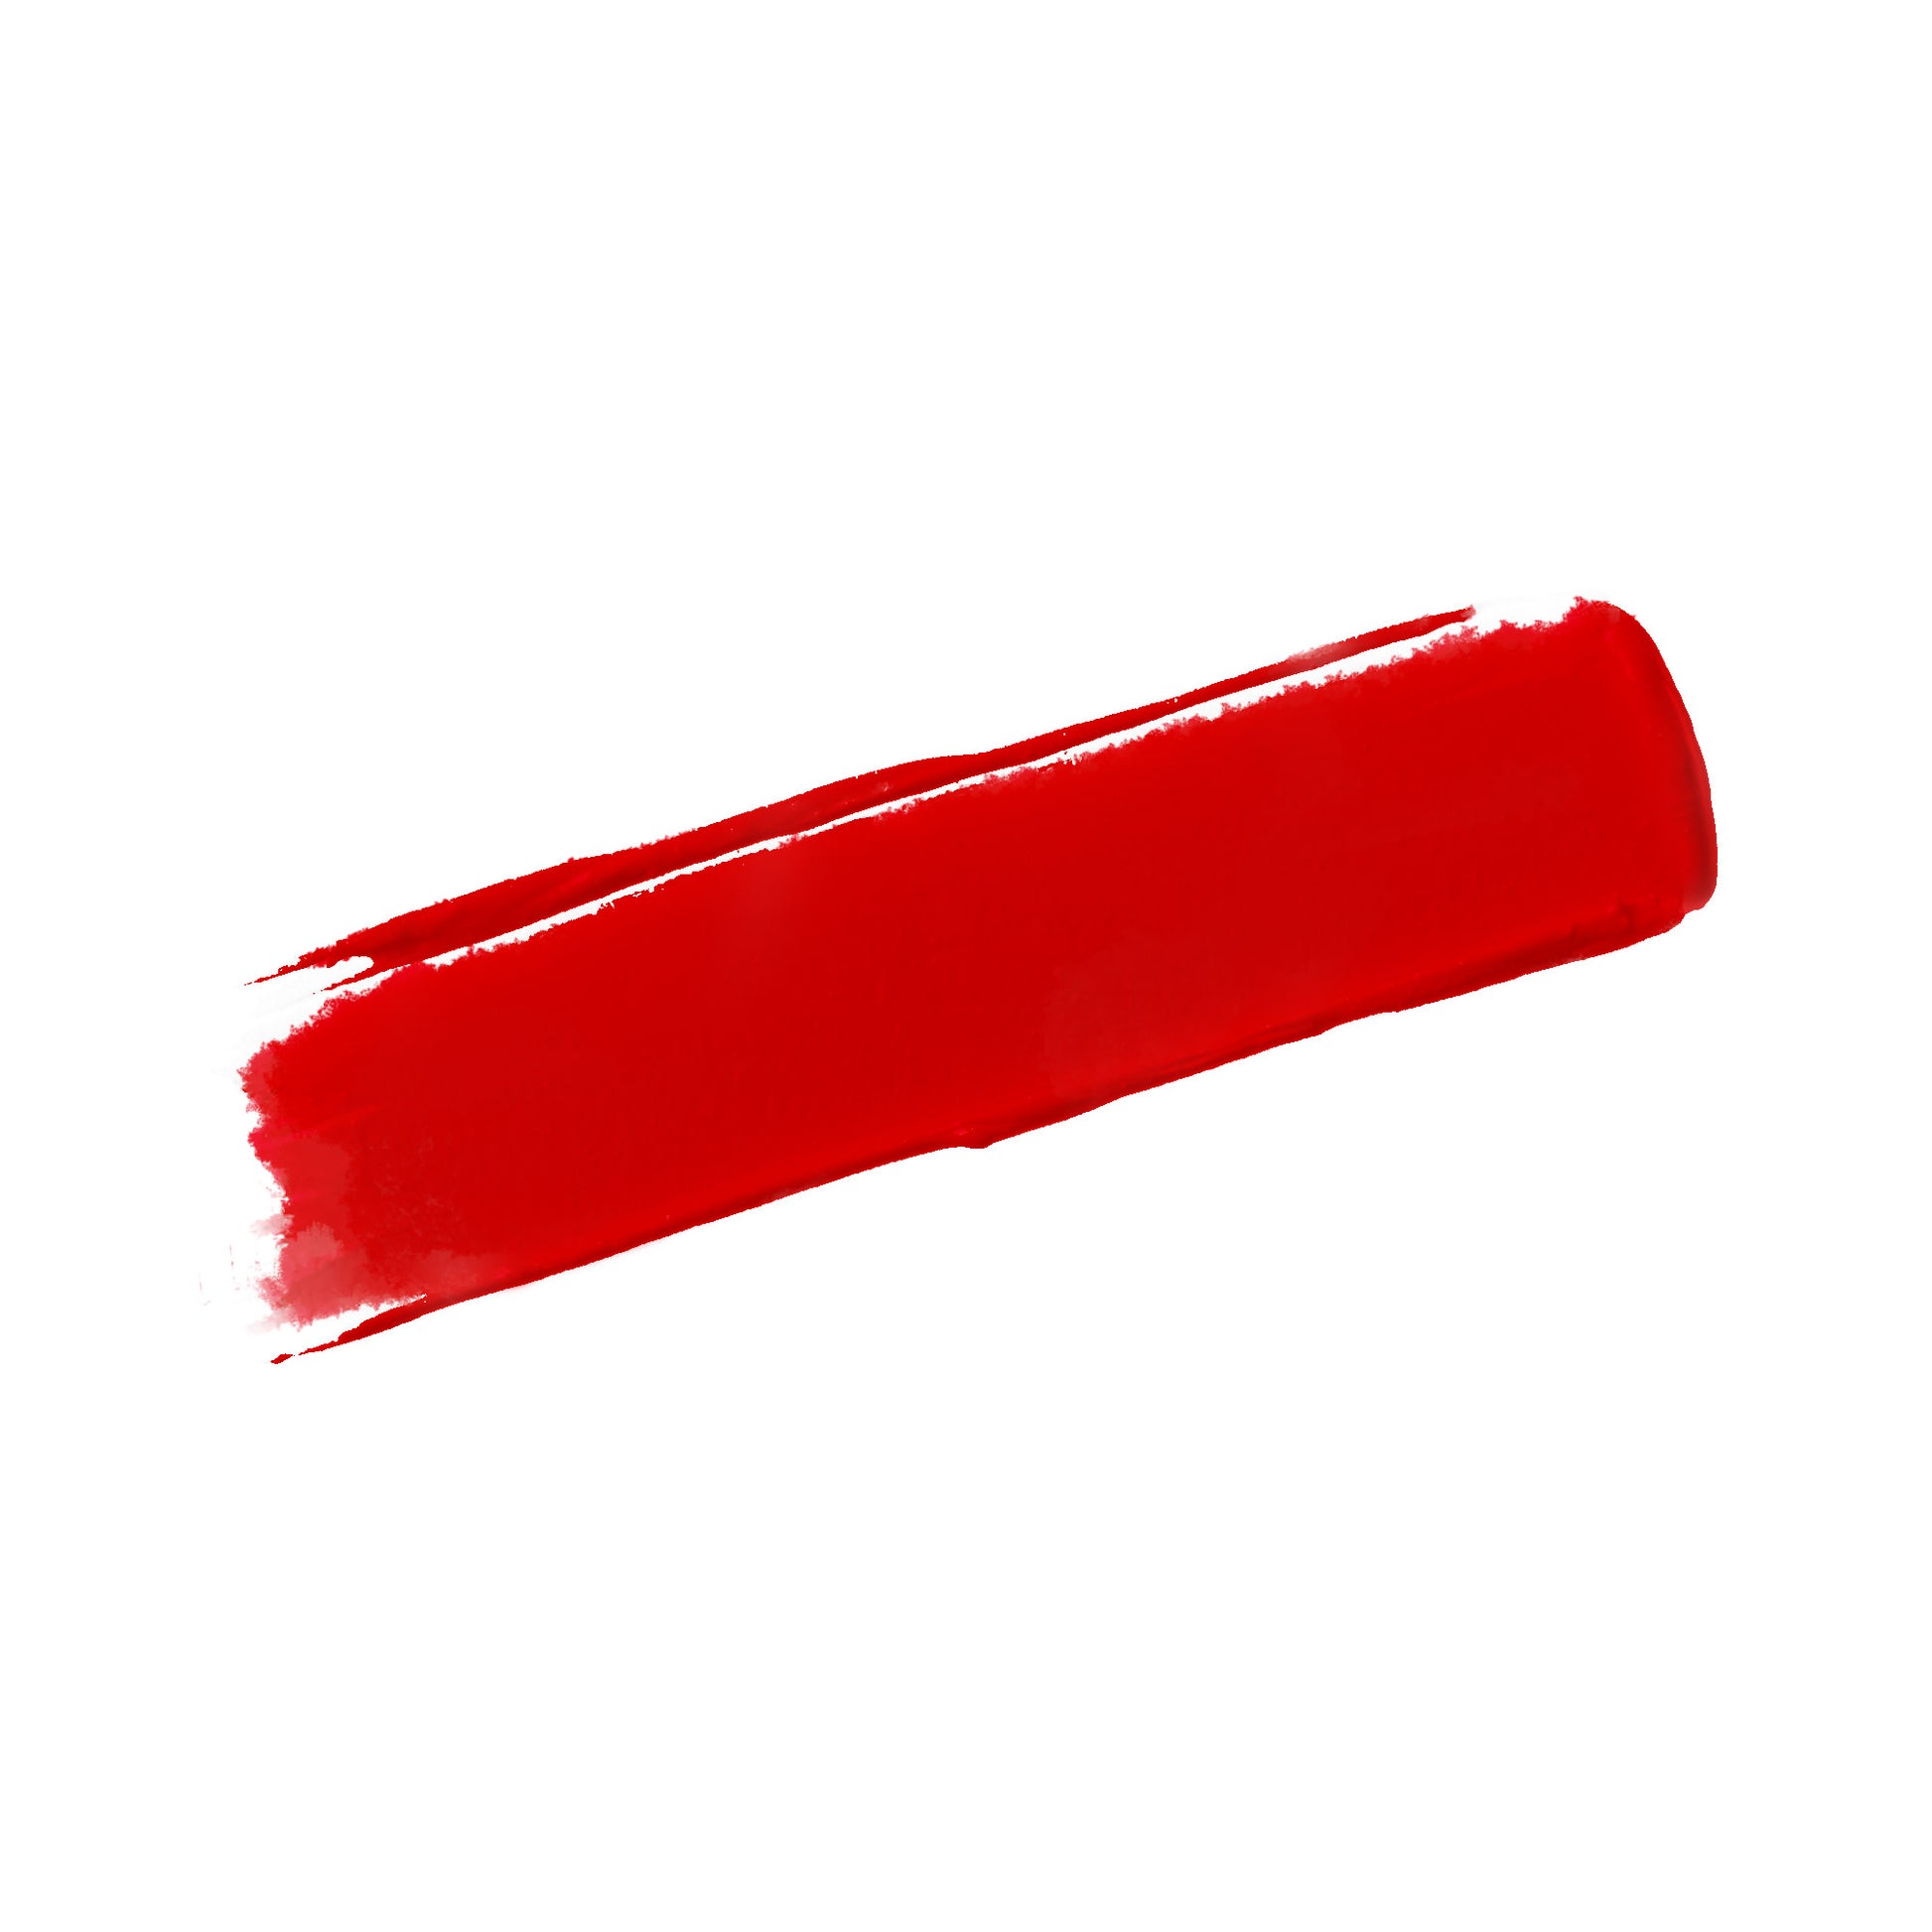 NXTE NXTEssence Hot Lips Liquid Lip Stick Swatch Color